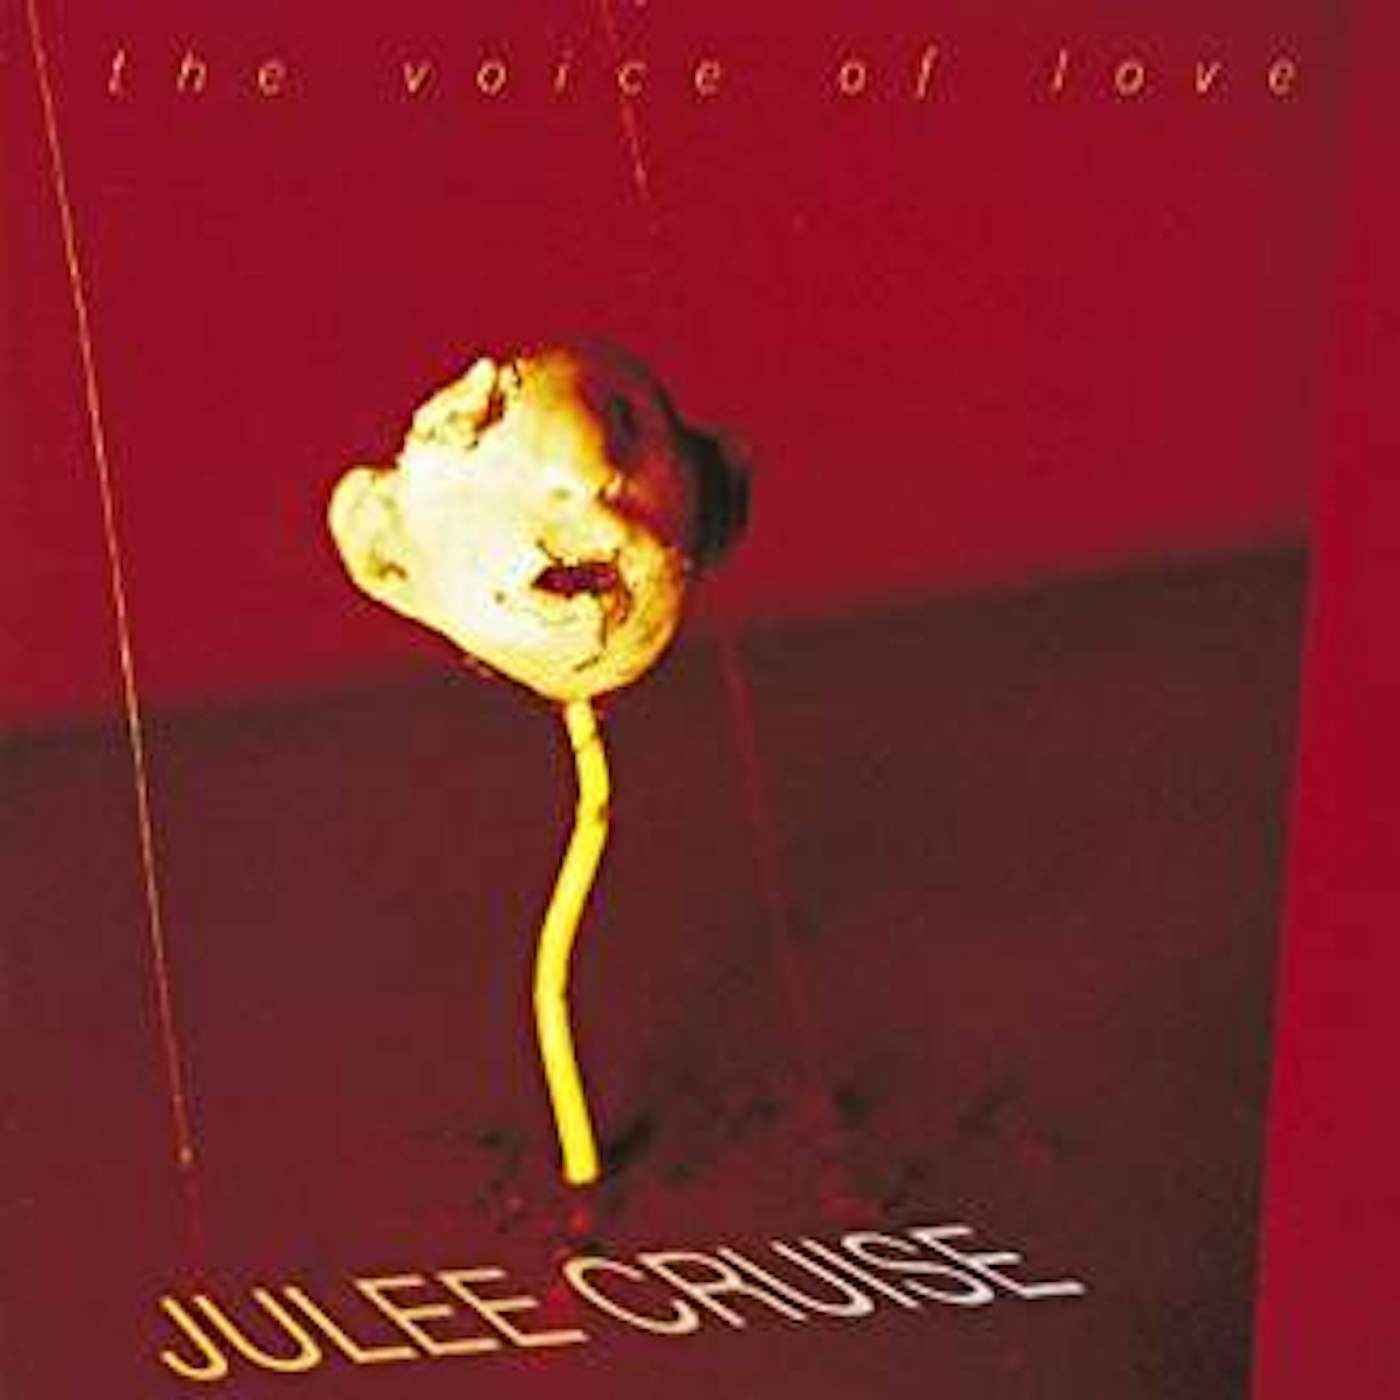 Julee Cruise VOICE OF LOVE Vinyl Record